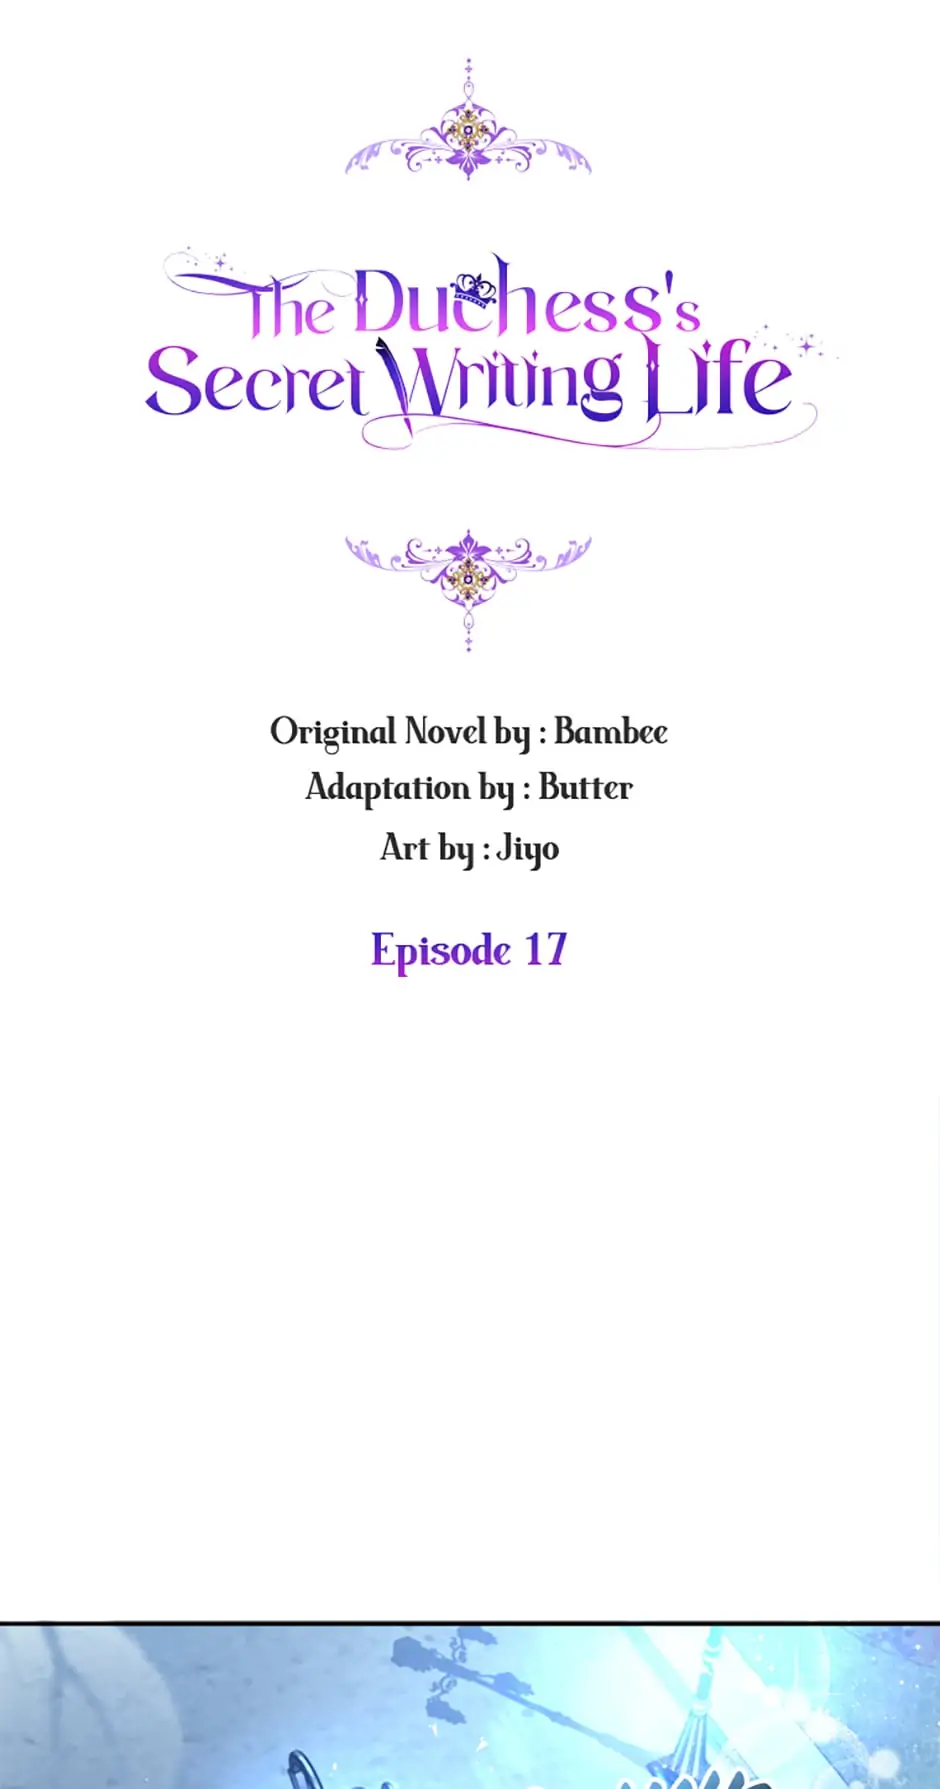 The Duchess’ Secret Writings chapter 17